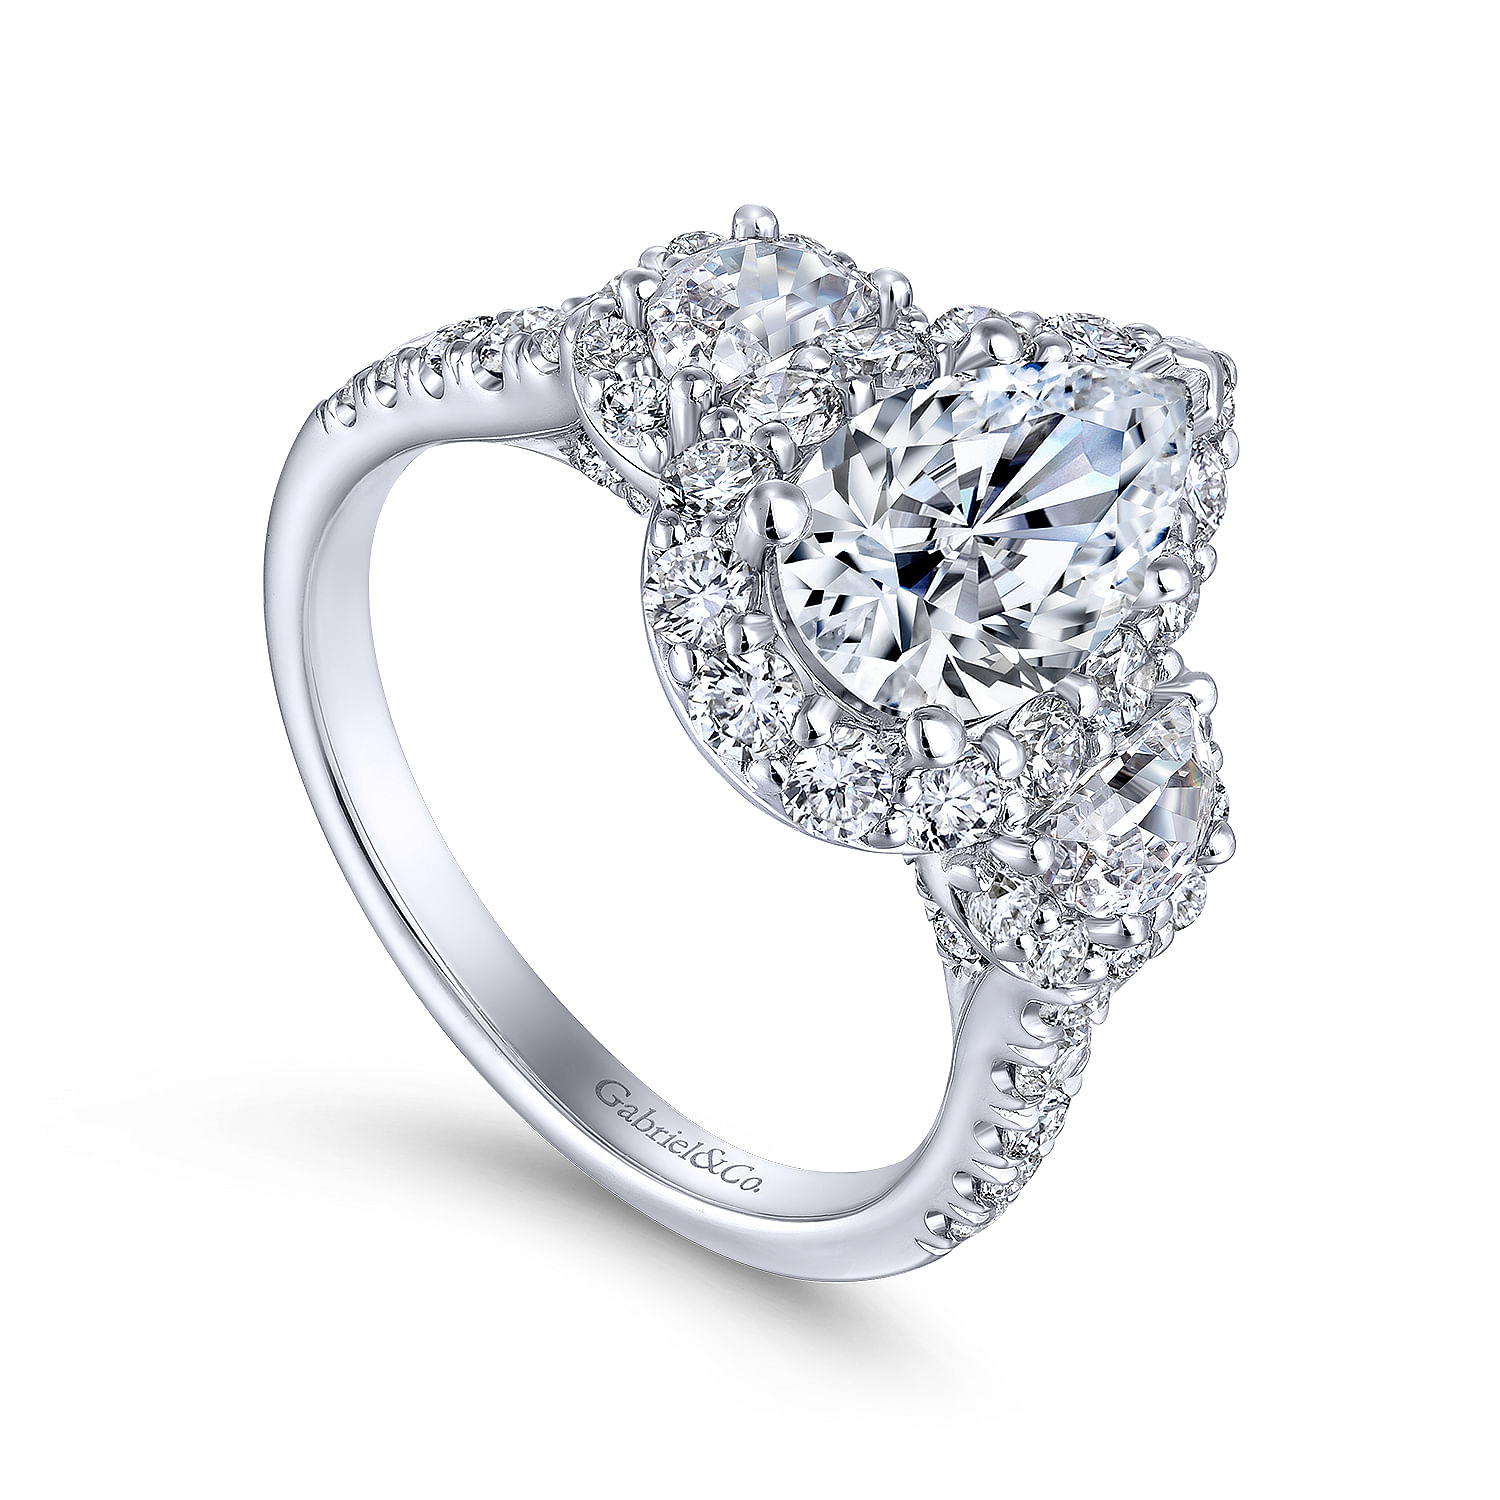 Pear Shaped Engagement Rings - Pear Cut Diamond Rings - Gabriel & Co.